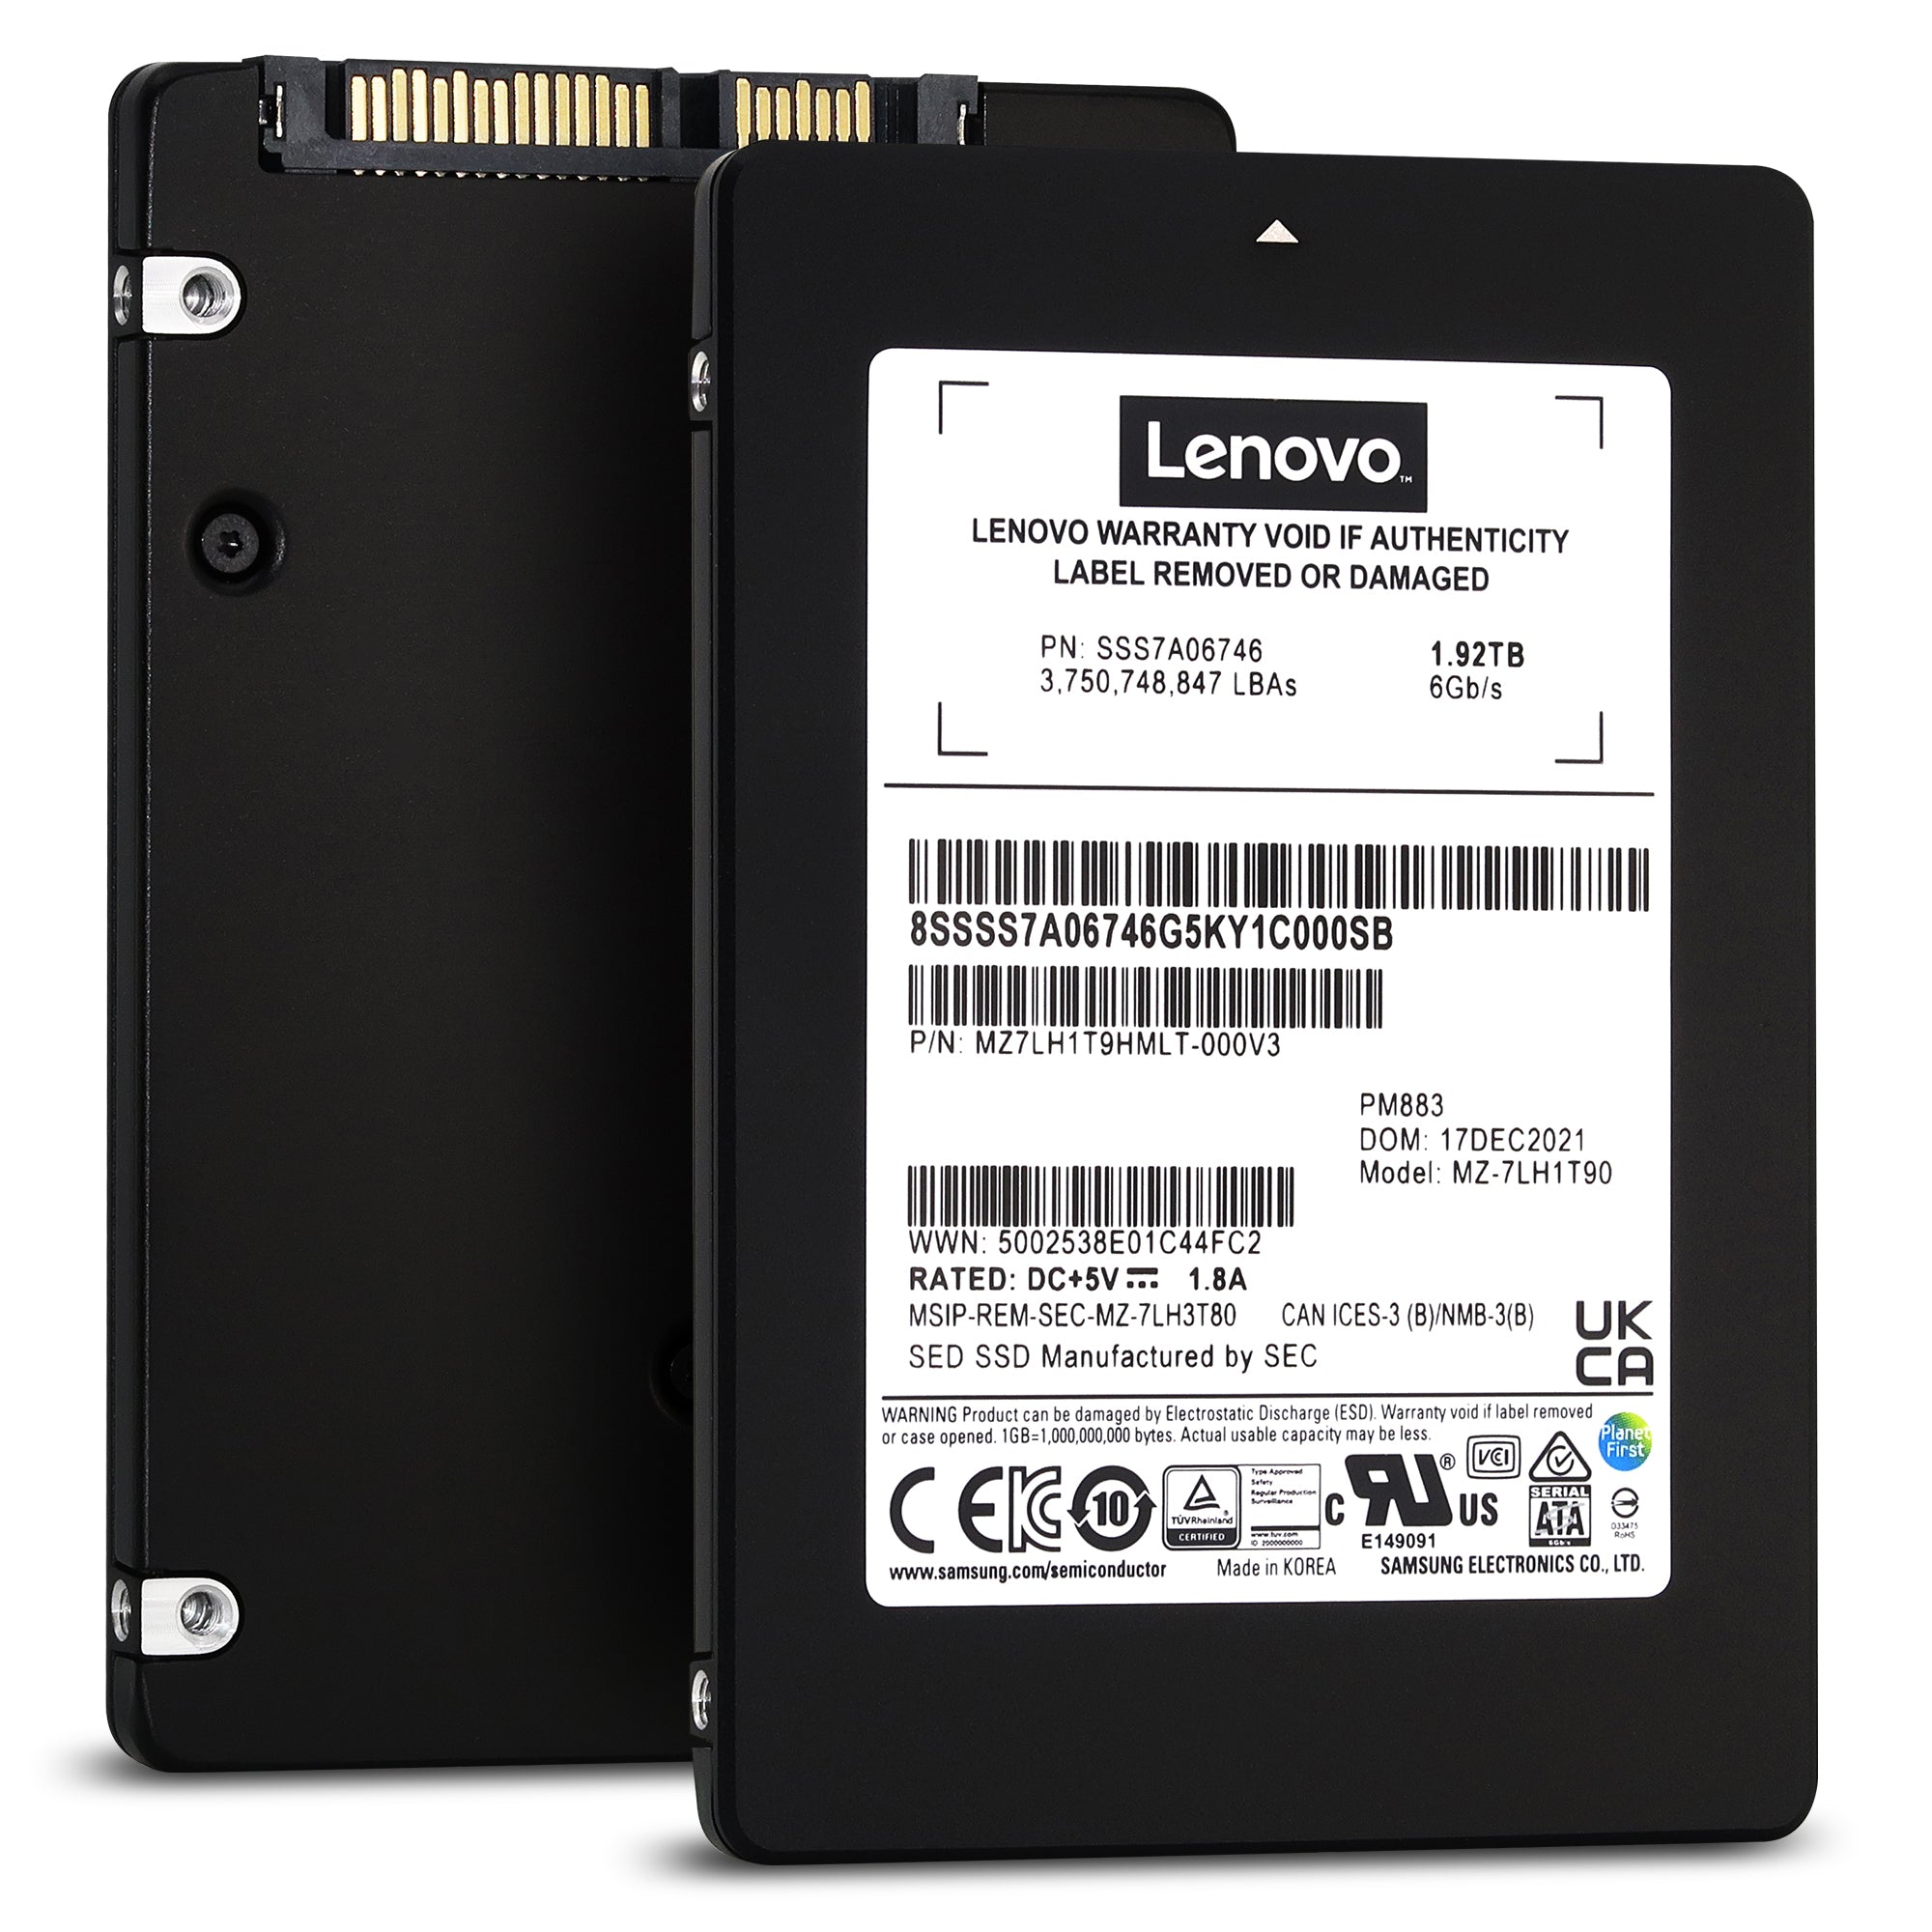 Lenovo PM883 MZ7LH1T9HMLT SSS7A06746 1.92TB SATA 6Gb/s 3D TLC 1.3DWPD 2.5in Refurbished SSD